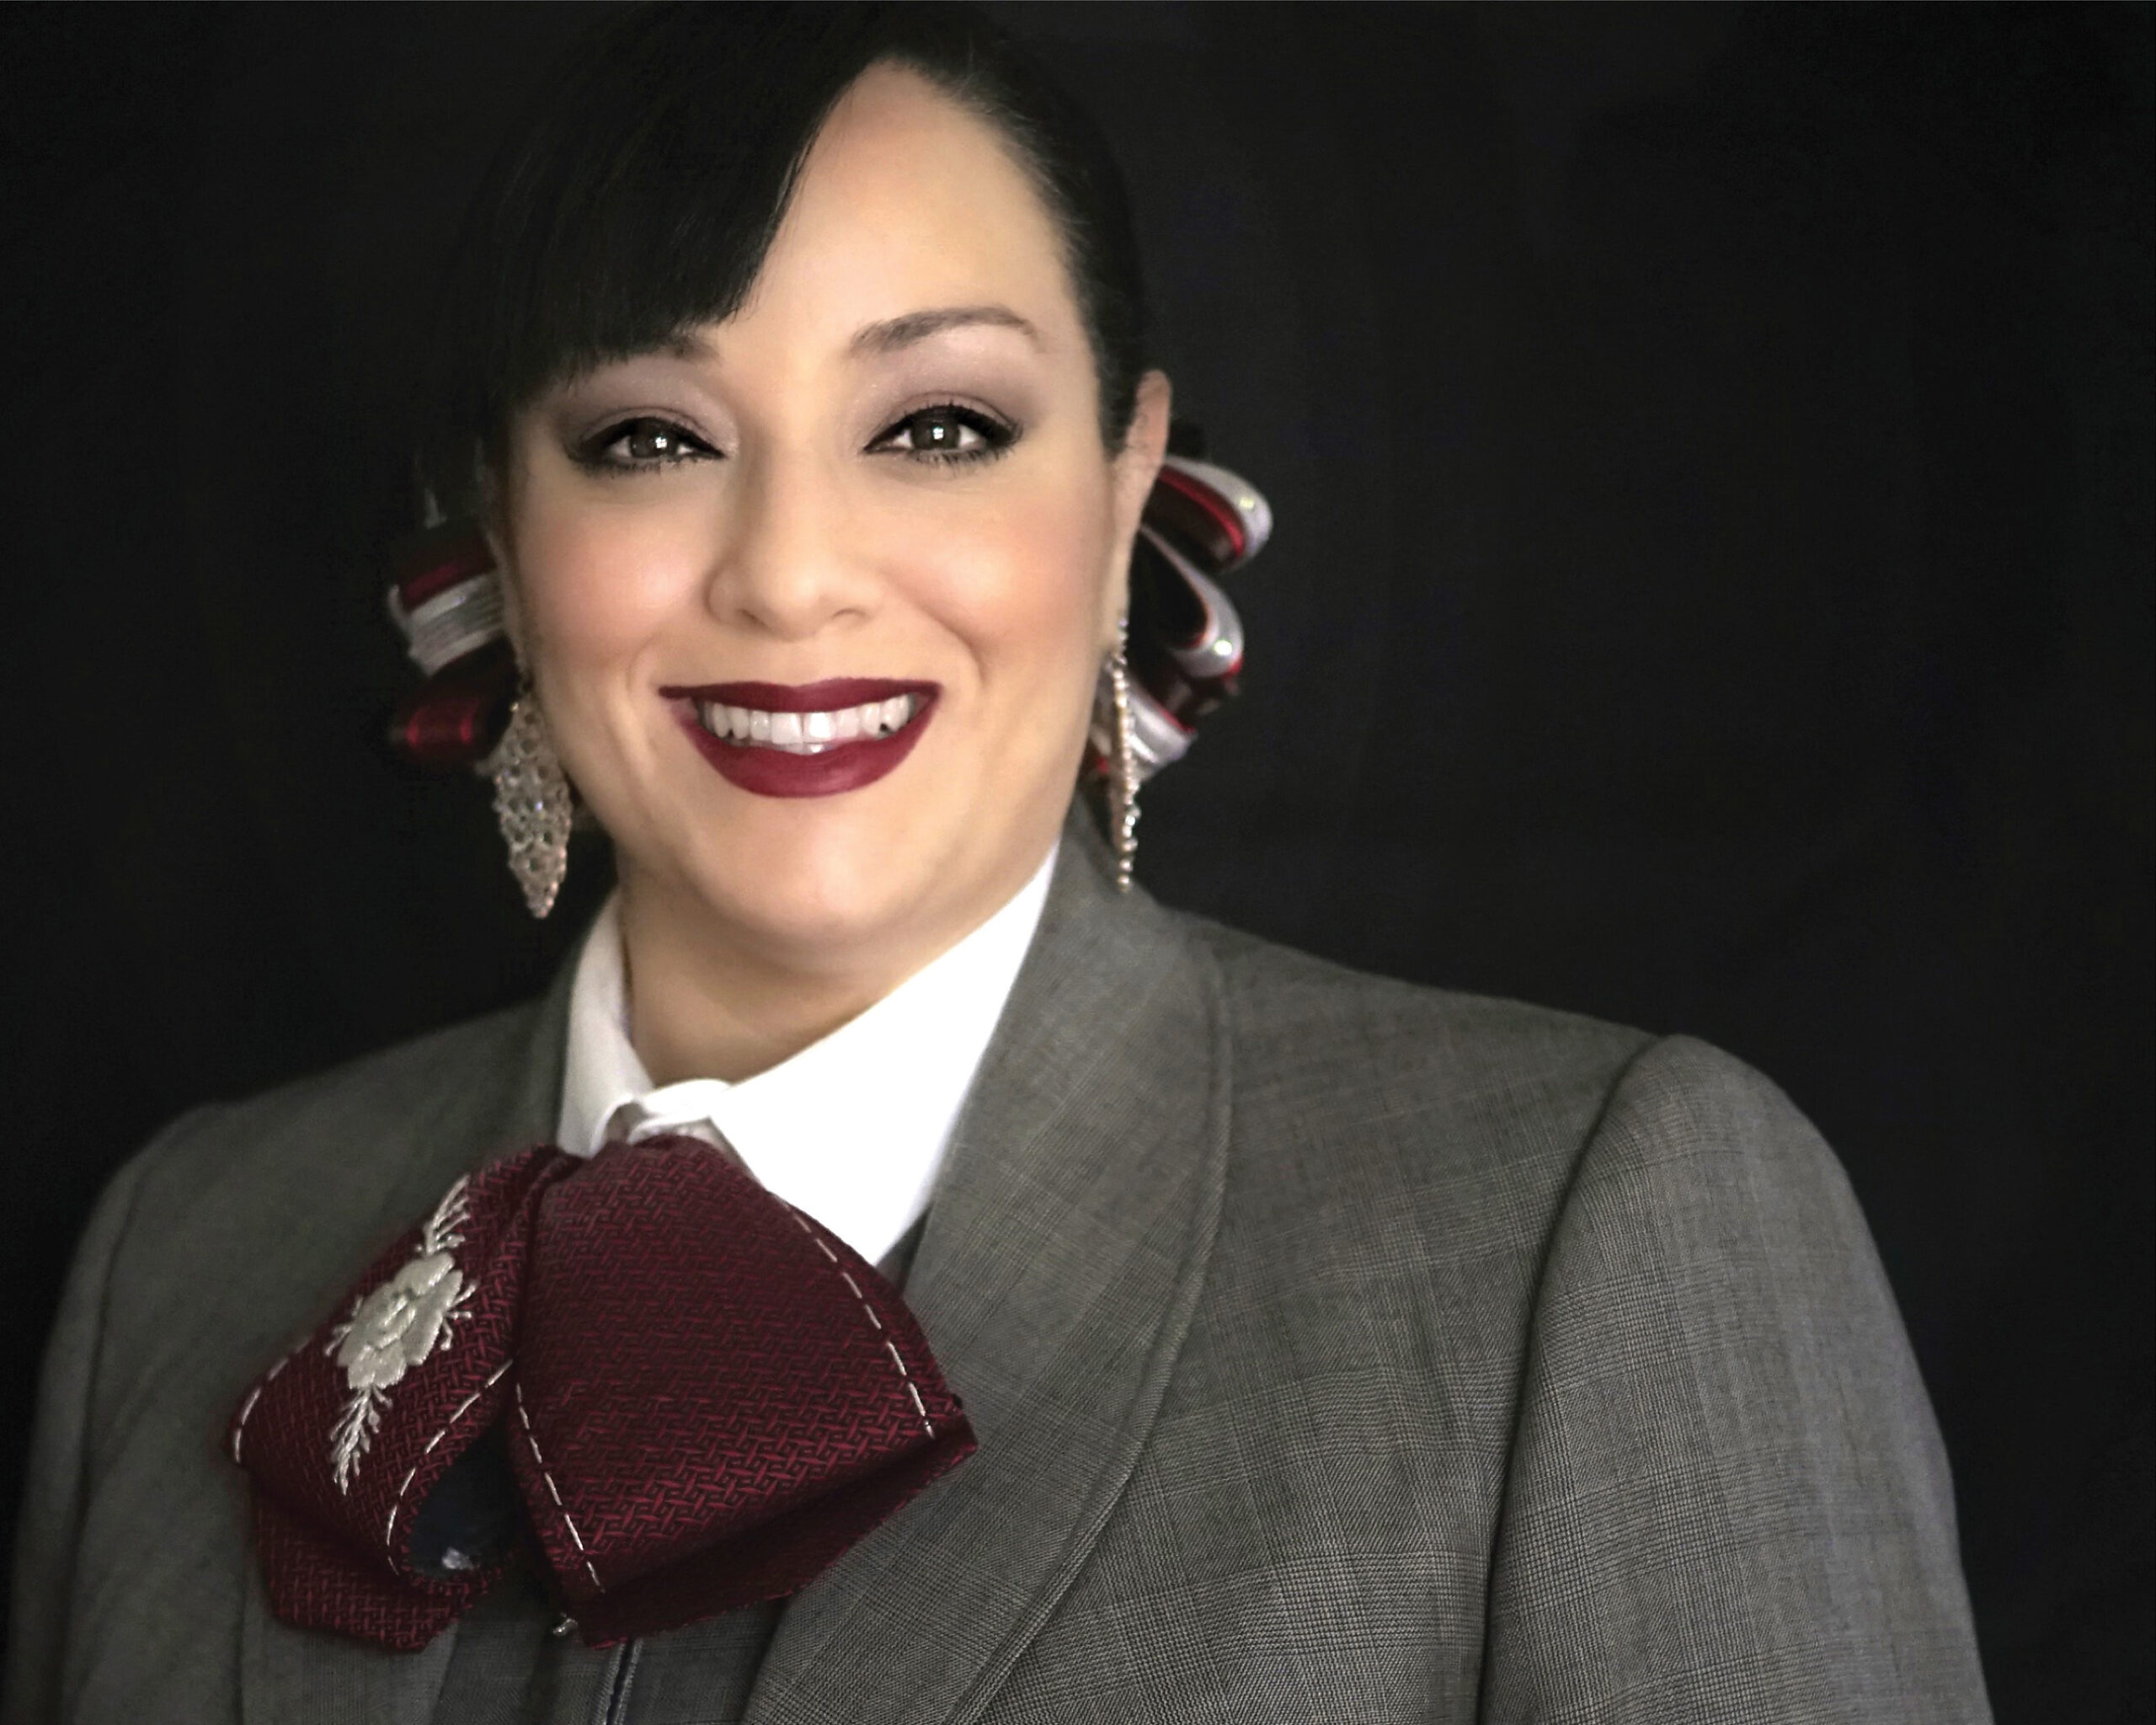 Portrait of woman in mariachi uniform smiling